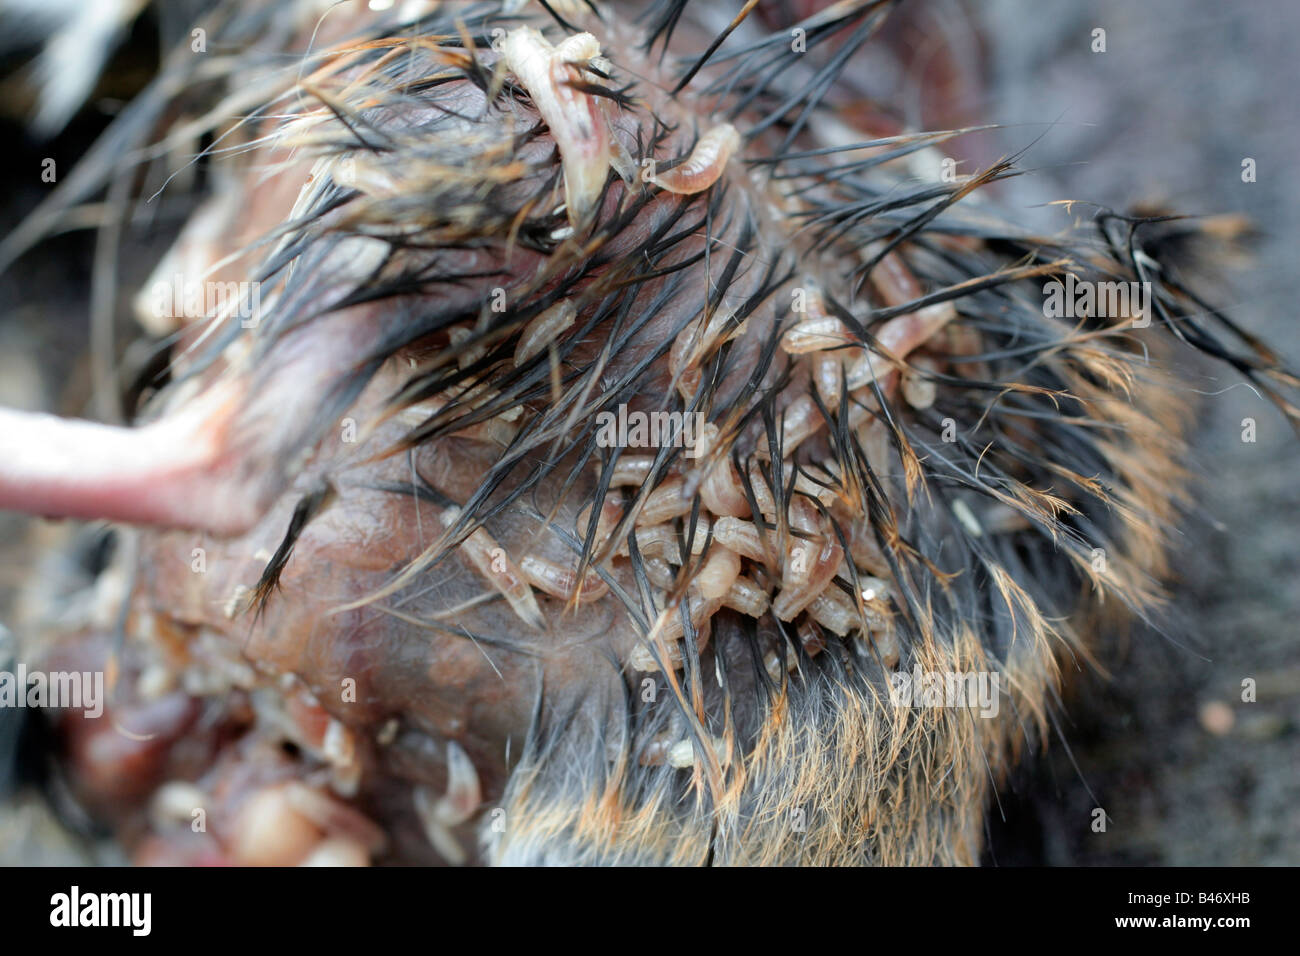 Un cadáver de ratón de campo siendo consumidos por las larvas de moscas Foto de stock